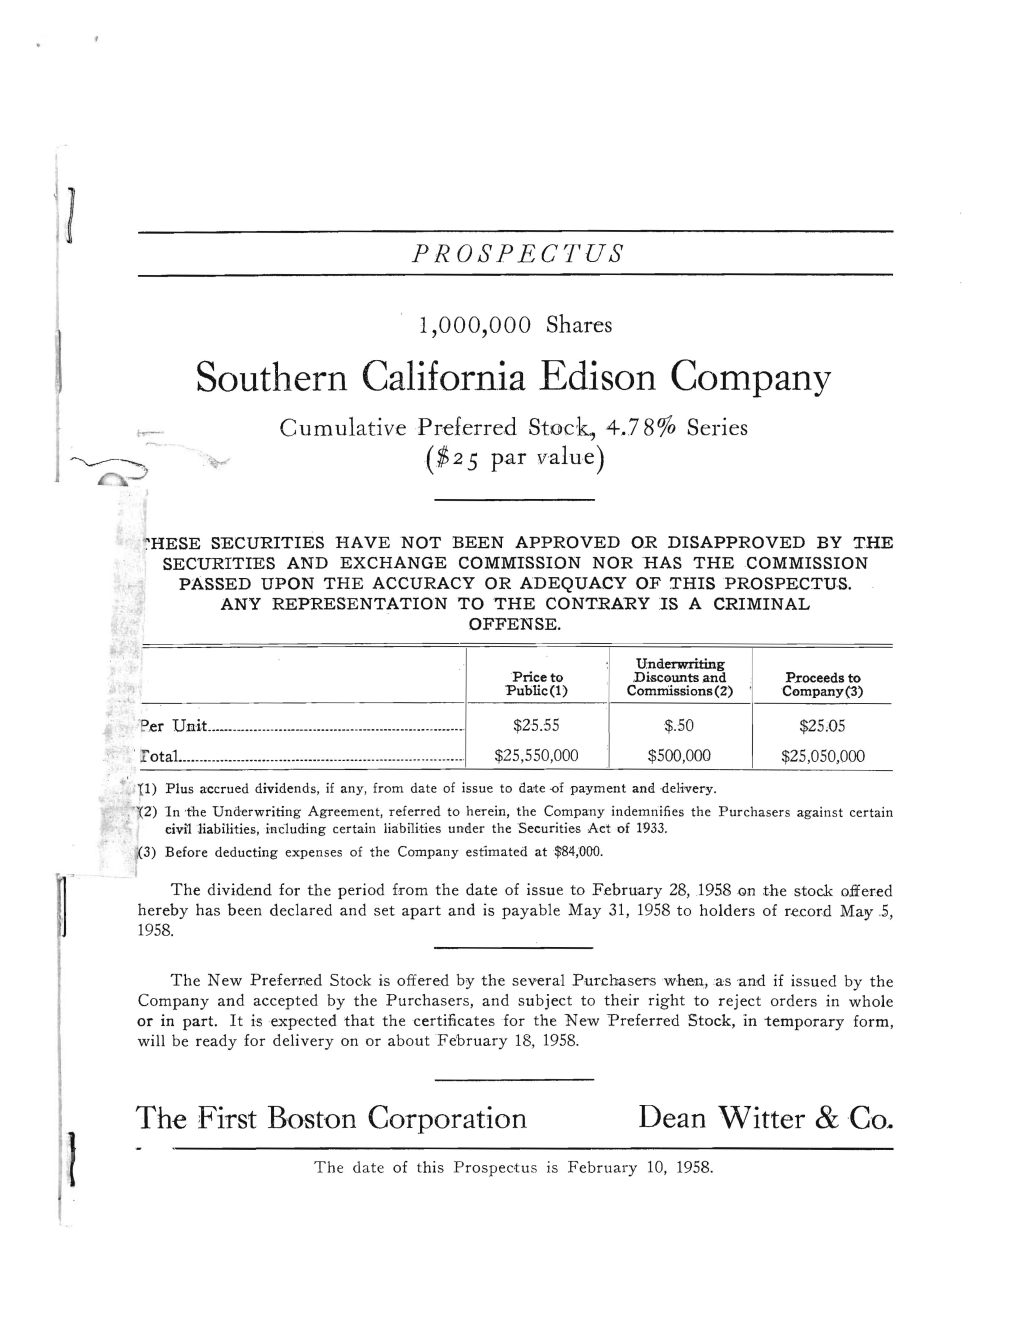 Southern Califor.Nia Edison Company Cumulative Preferred Stock, 4.78% Series